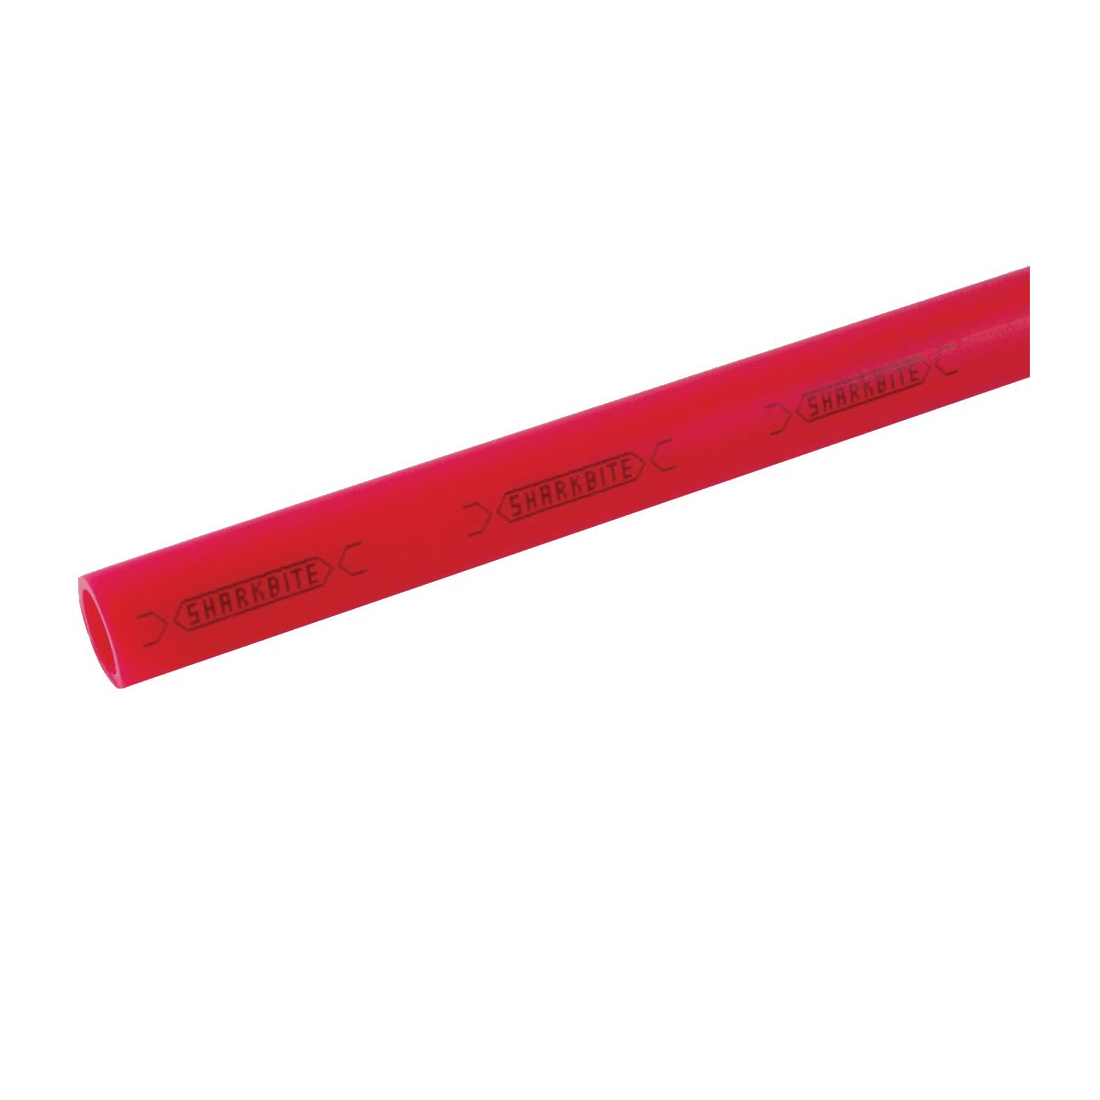 APPR1210 PEX-B Pipe Tubing, 1/2 in, Red, 10 ft L